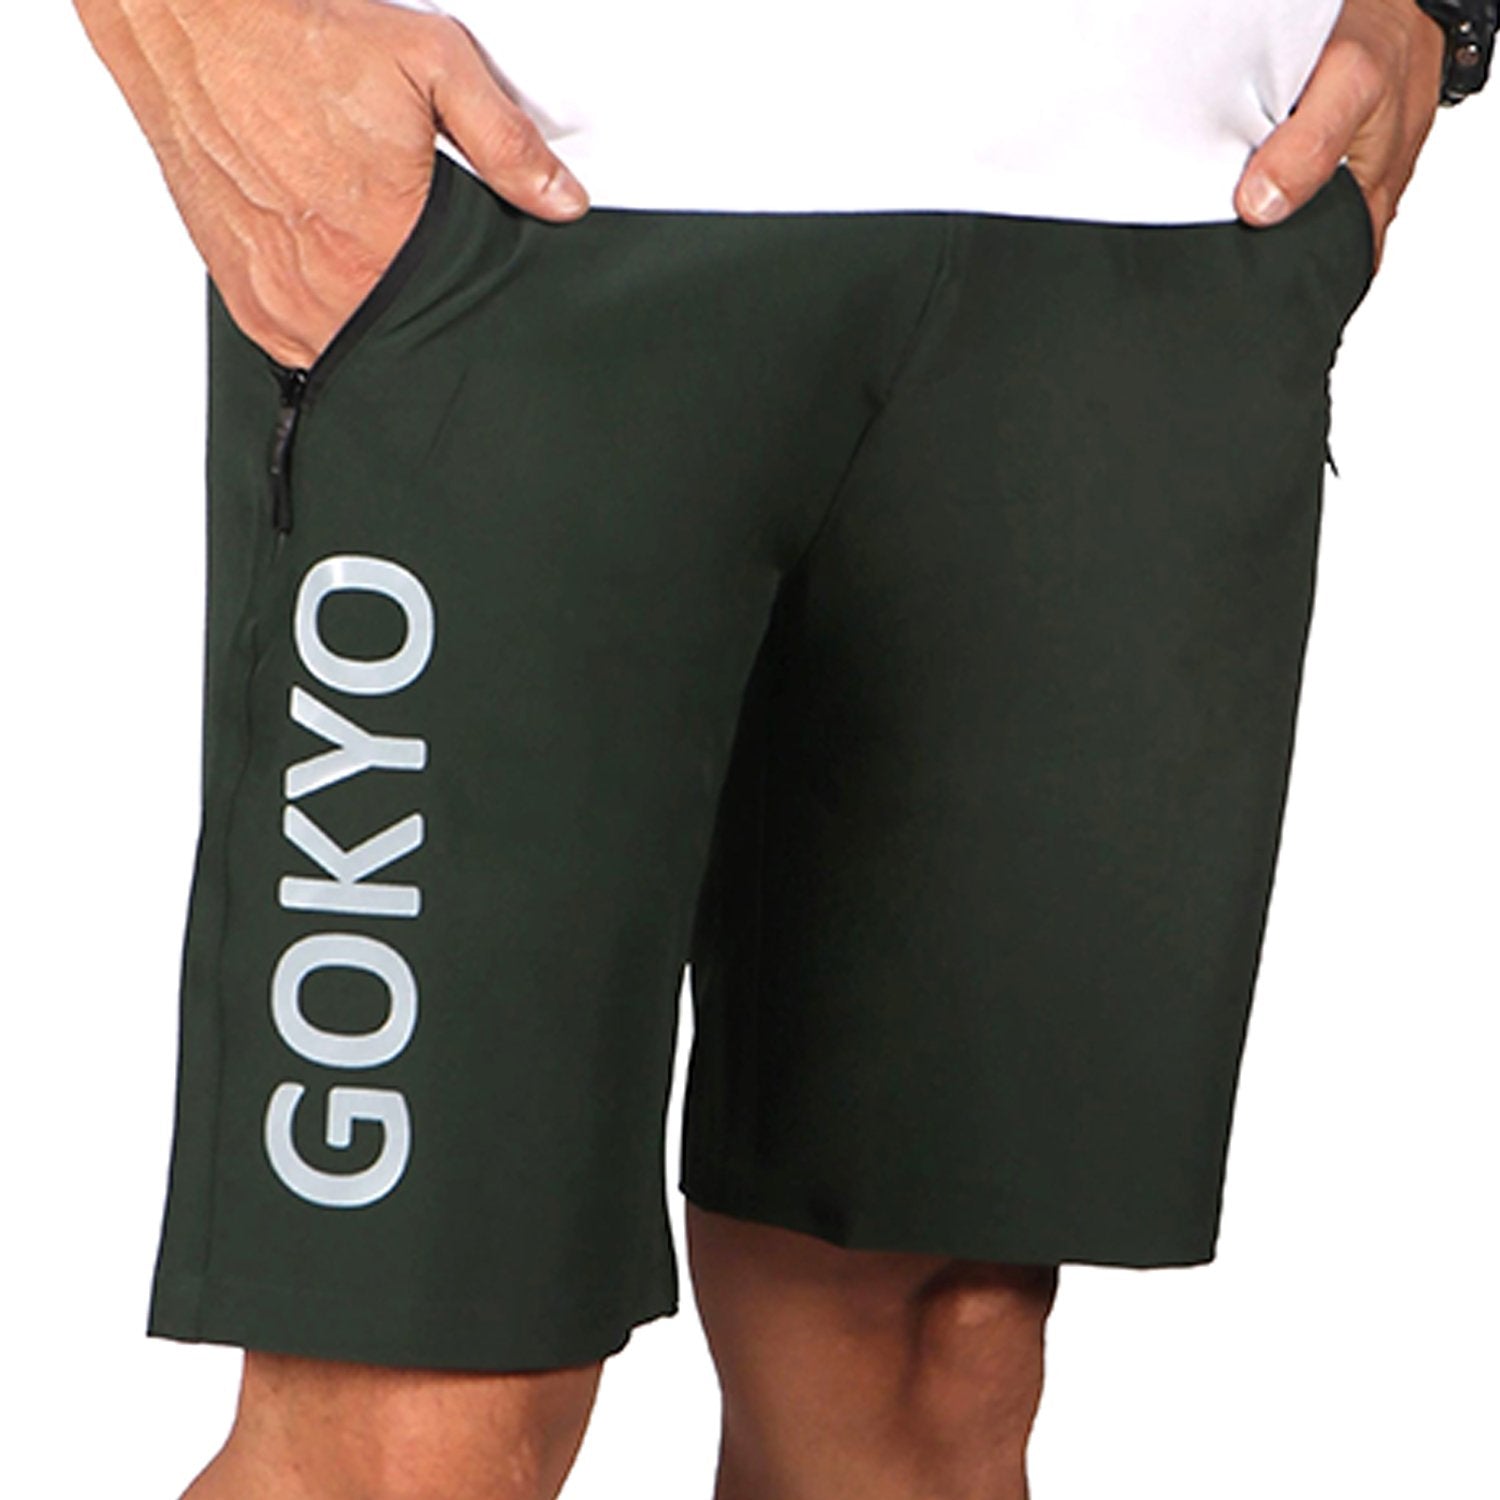 Buy Kalimpong Trekking & Outdoor Shorts at Gokyo Outdoor Clothing & Gear